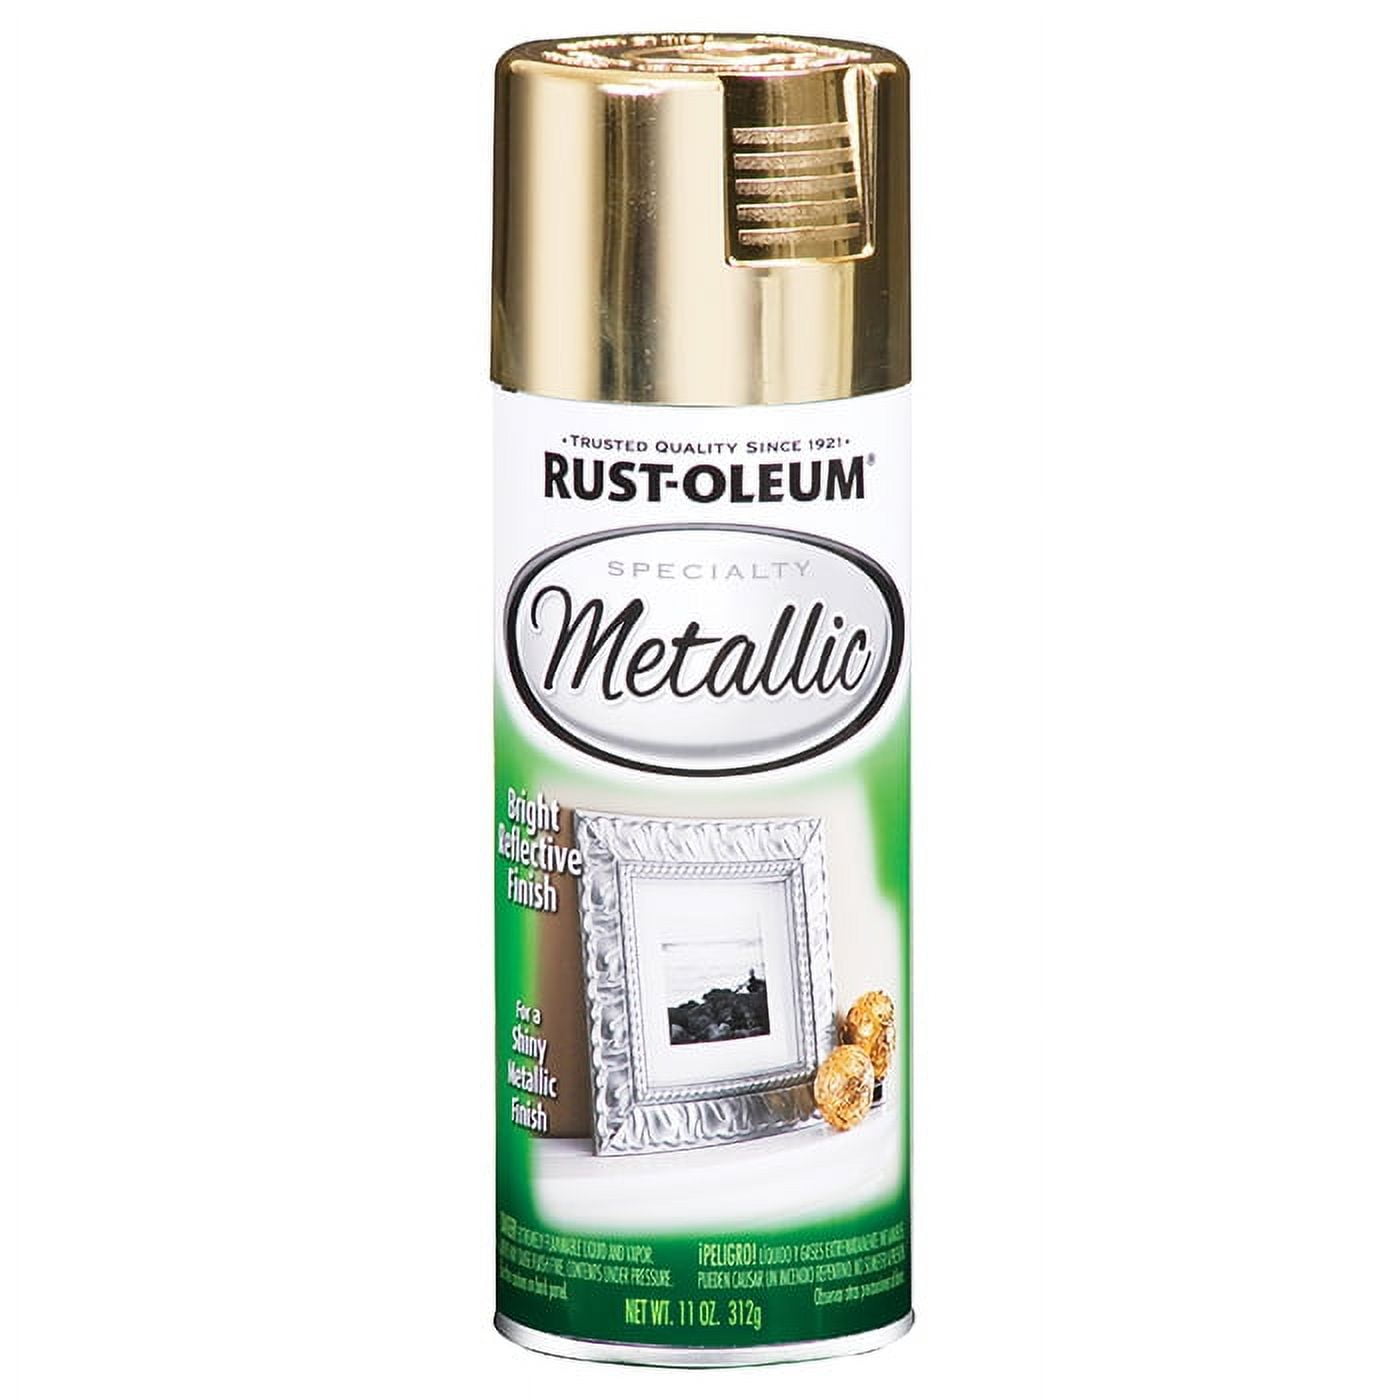 Rust-Oleum Industrial Metallic Spray Paint, 11 oz, Gold, Metallic